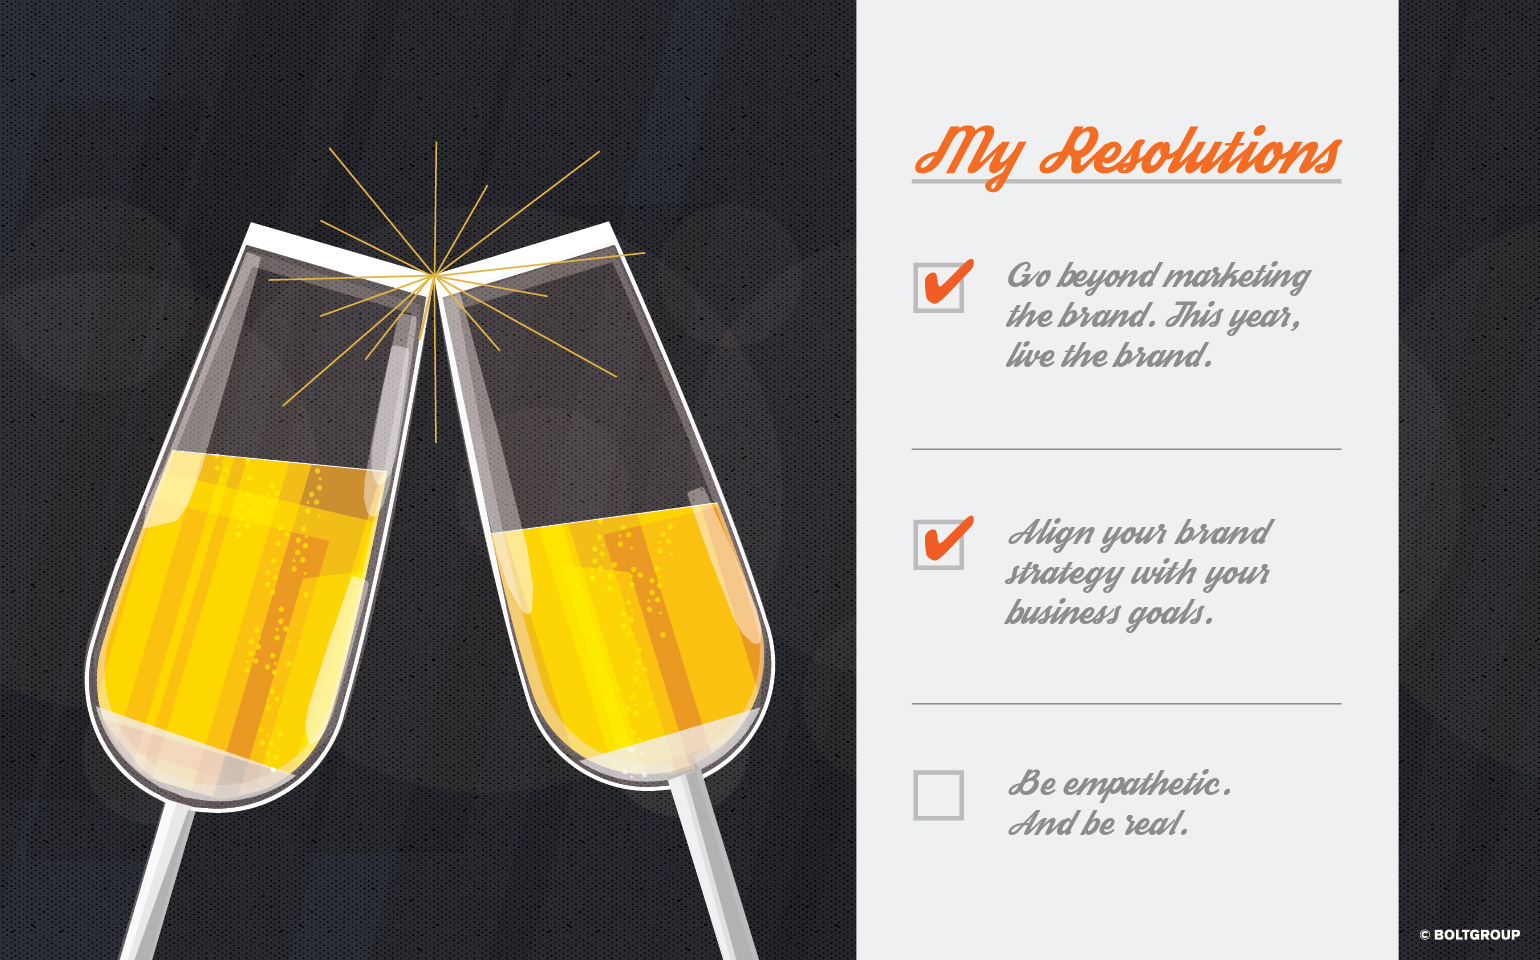 illustration of toasting champagne glasses & resolution list